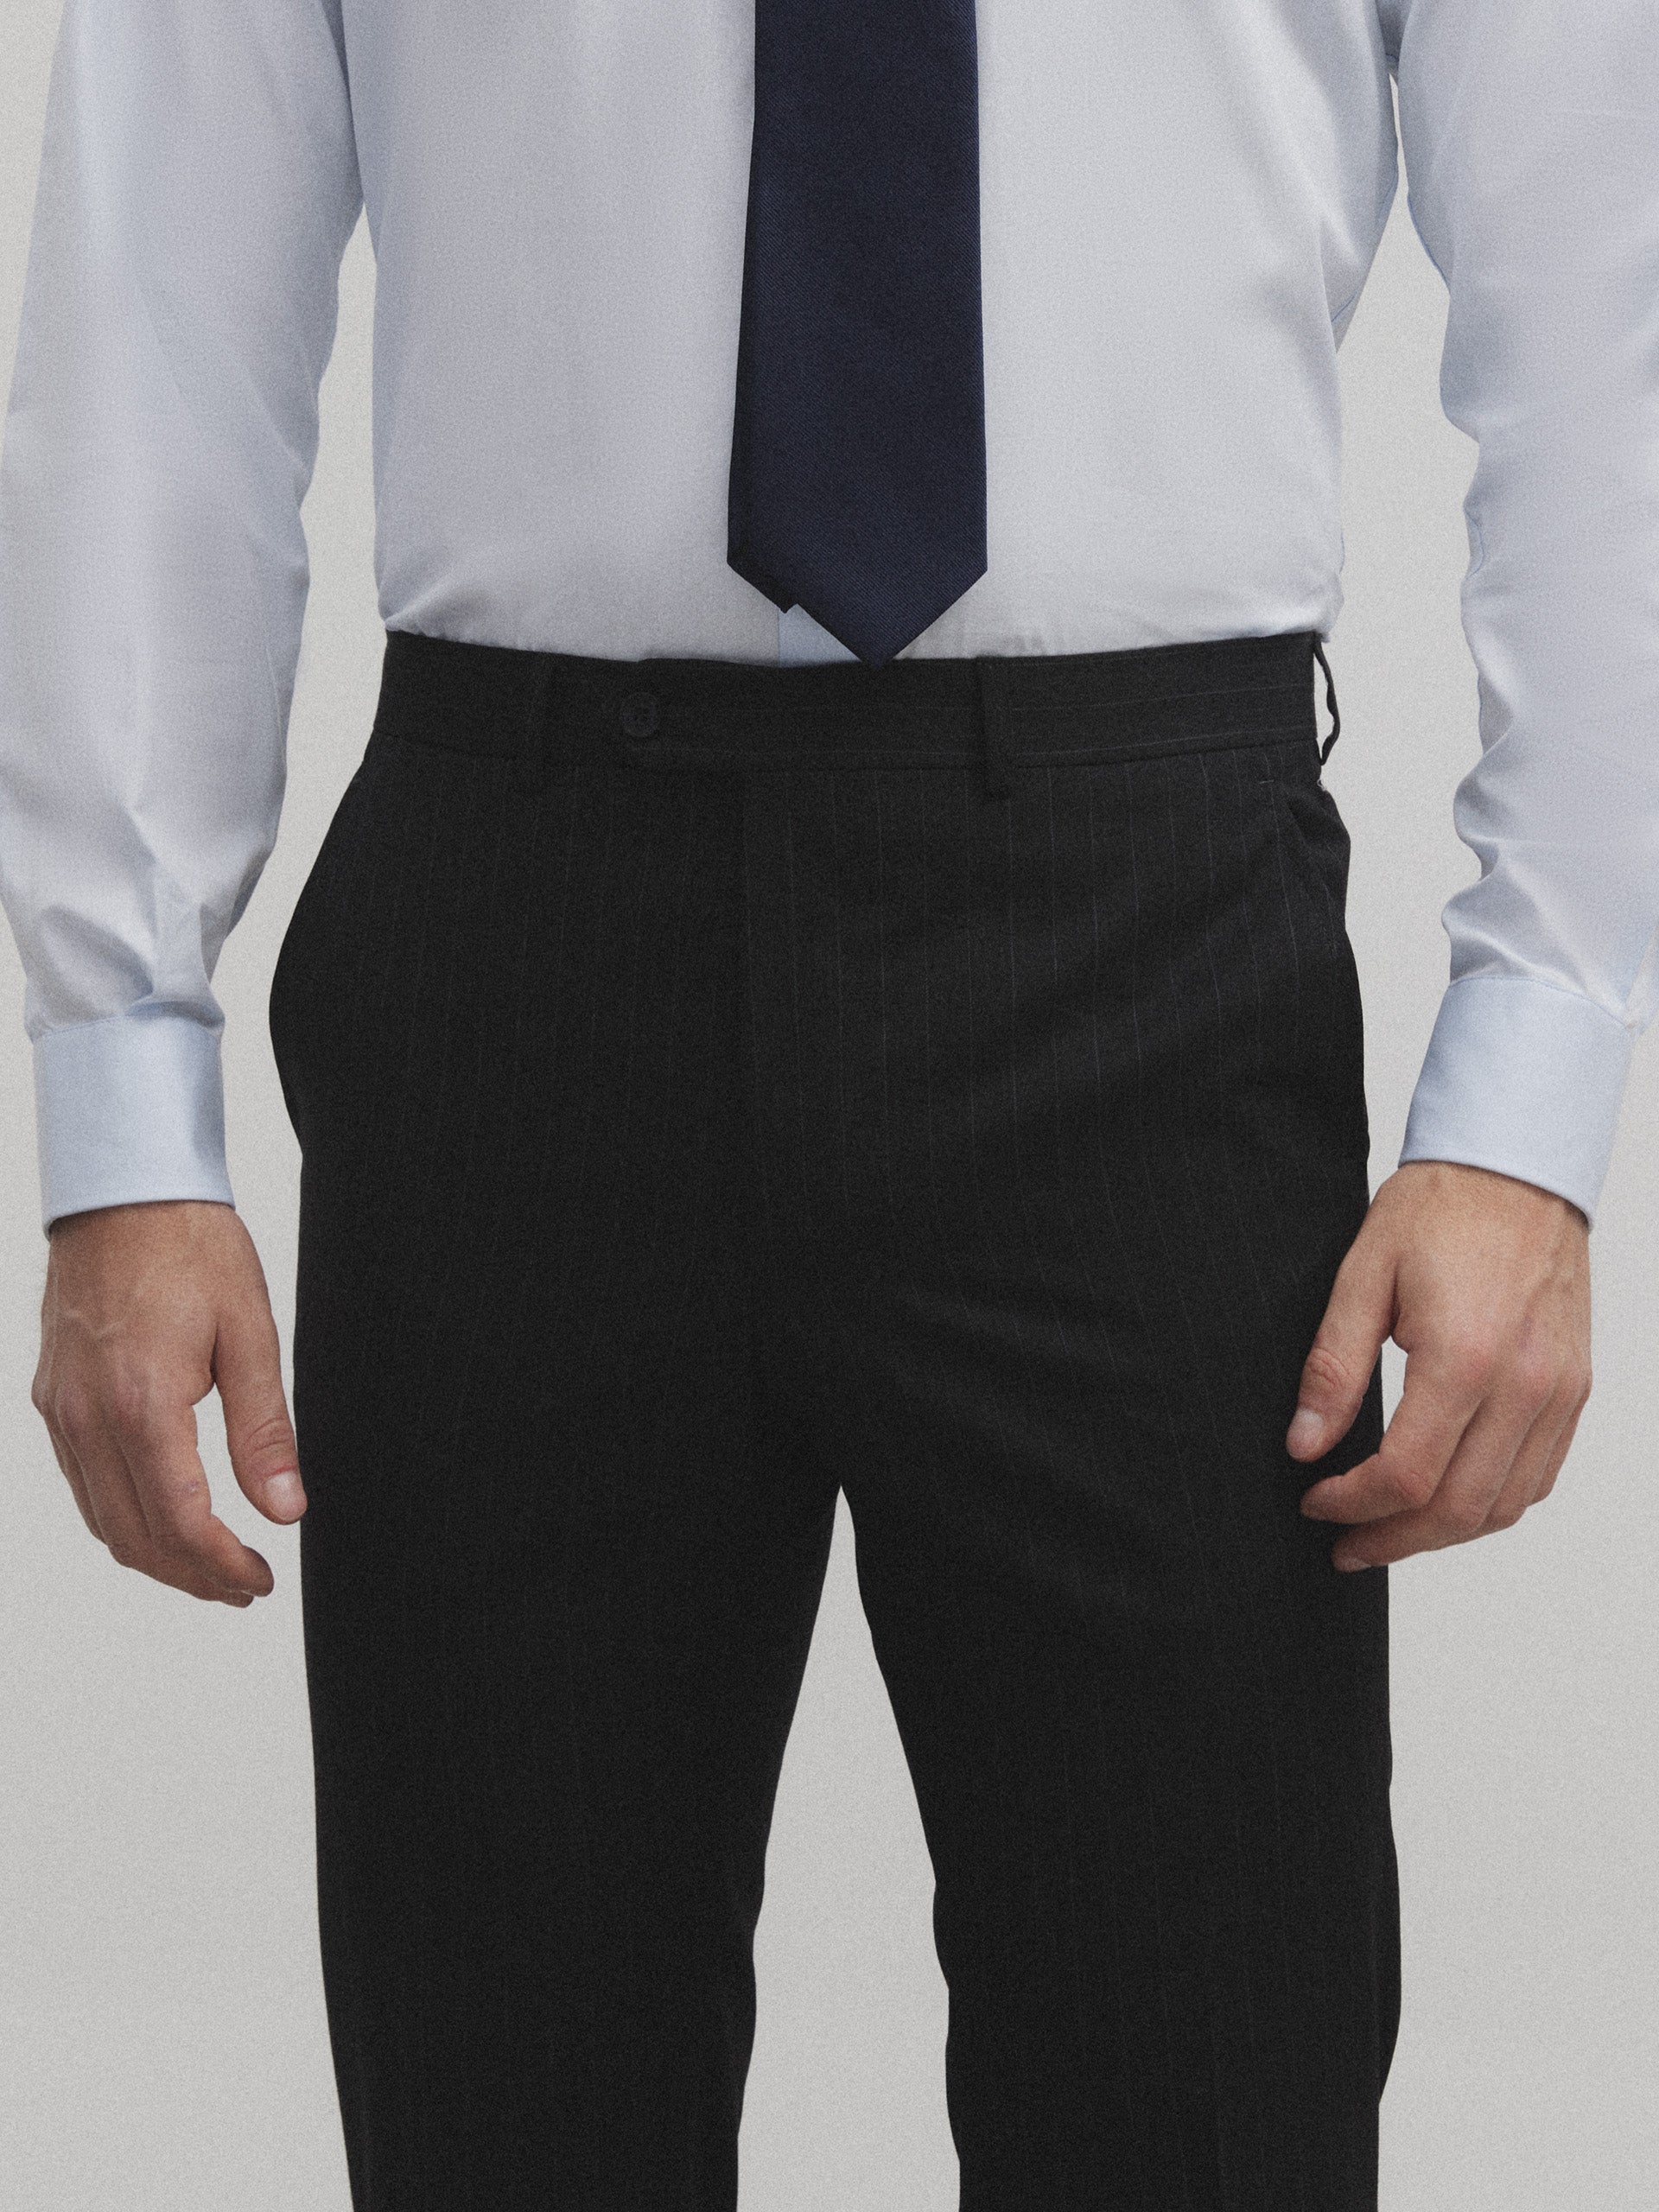 Classic gray diplomatic suit pants